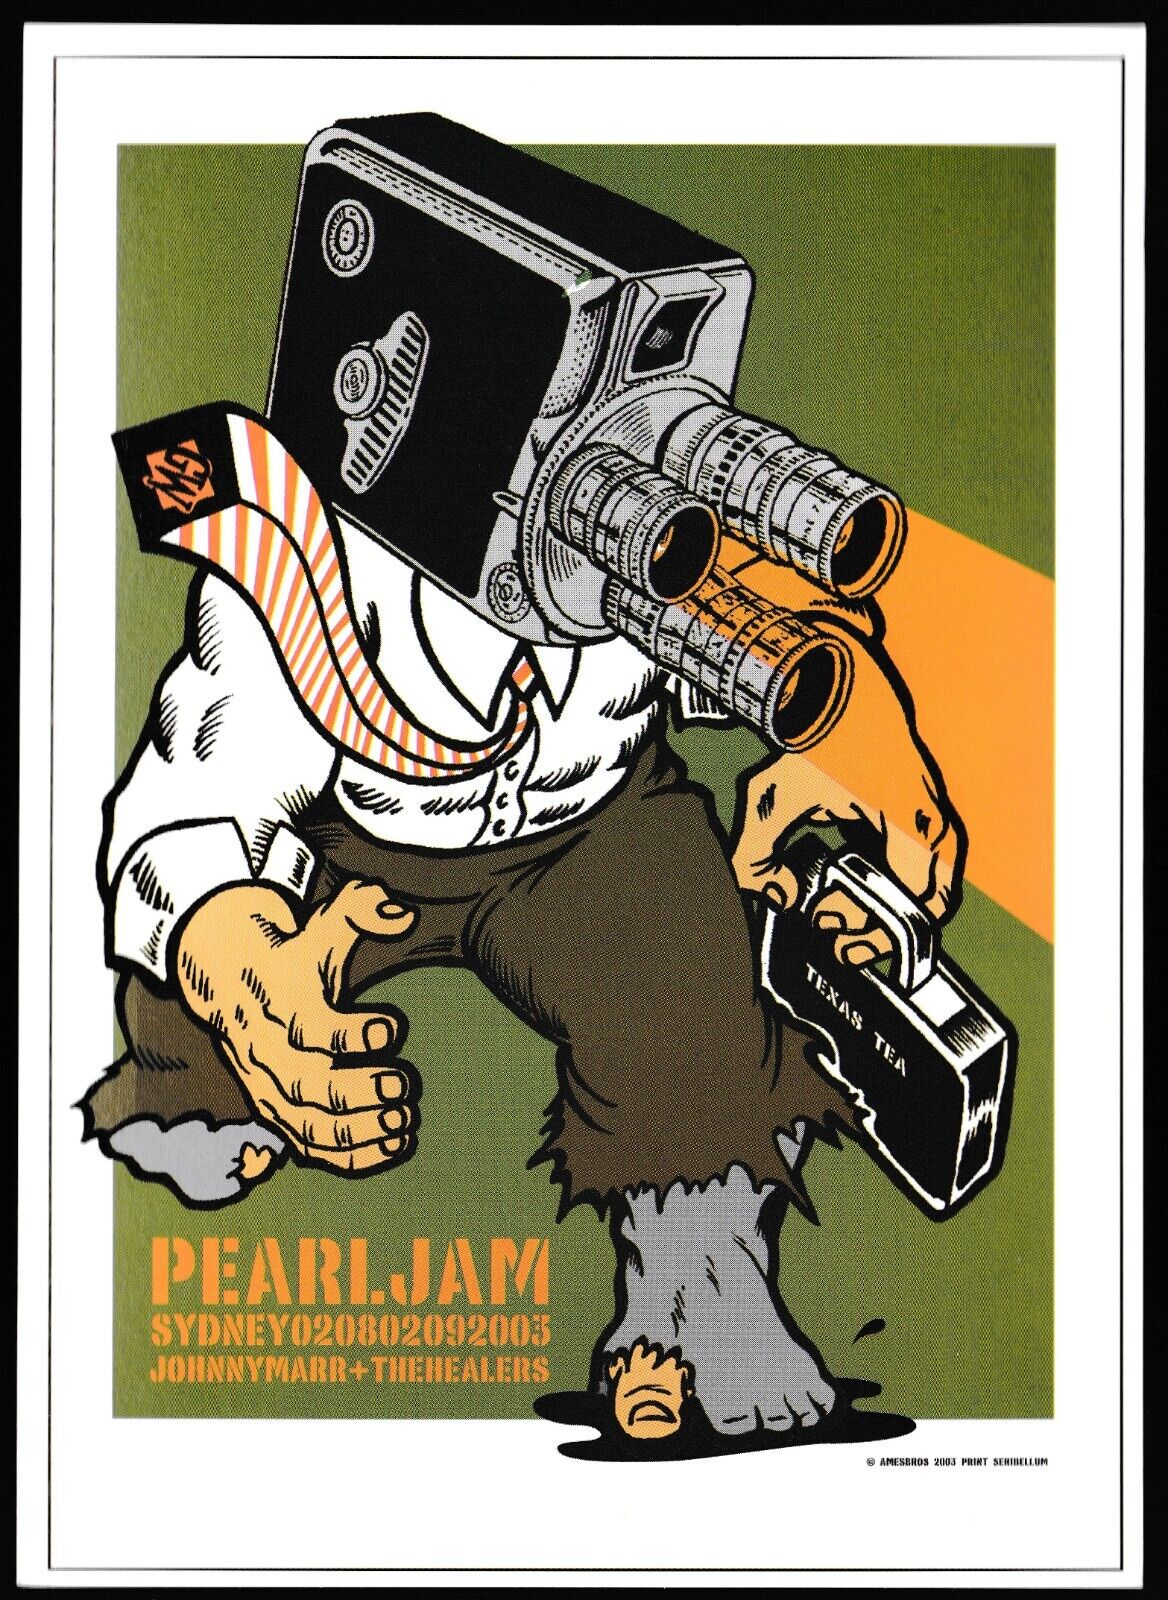 Pearl Jam 2003 Sydney Australia Postcard 5x7 Poster Print Ames Bros Eddie Vedder